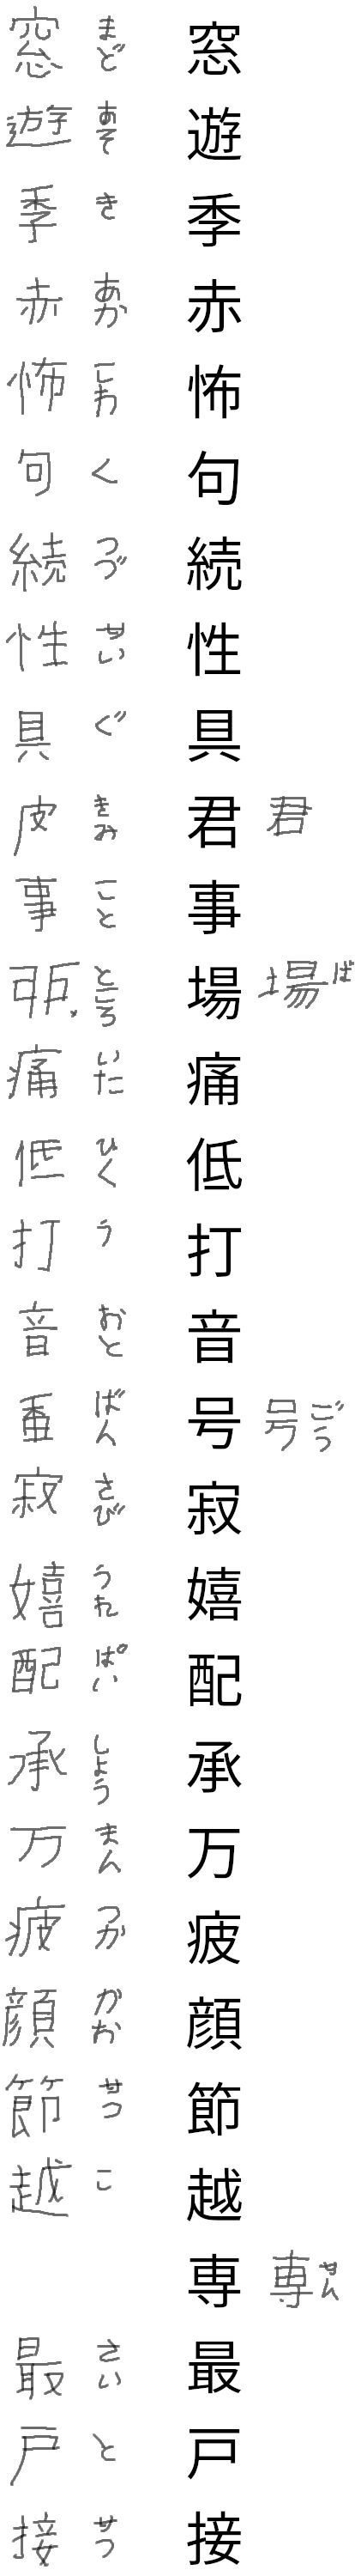 kanji test row 29